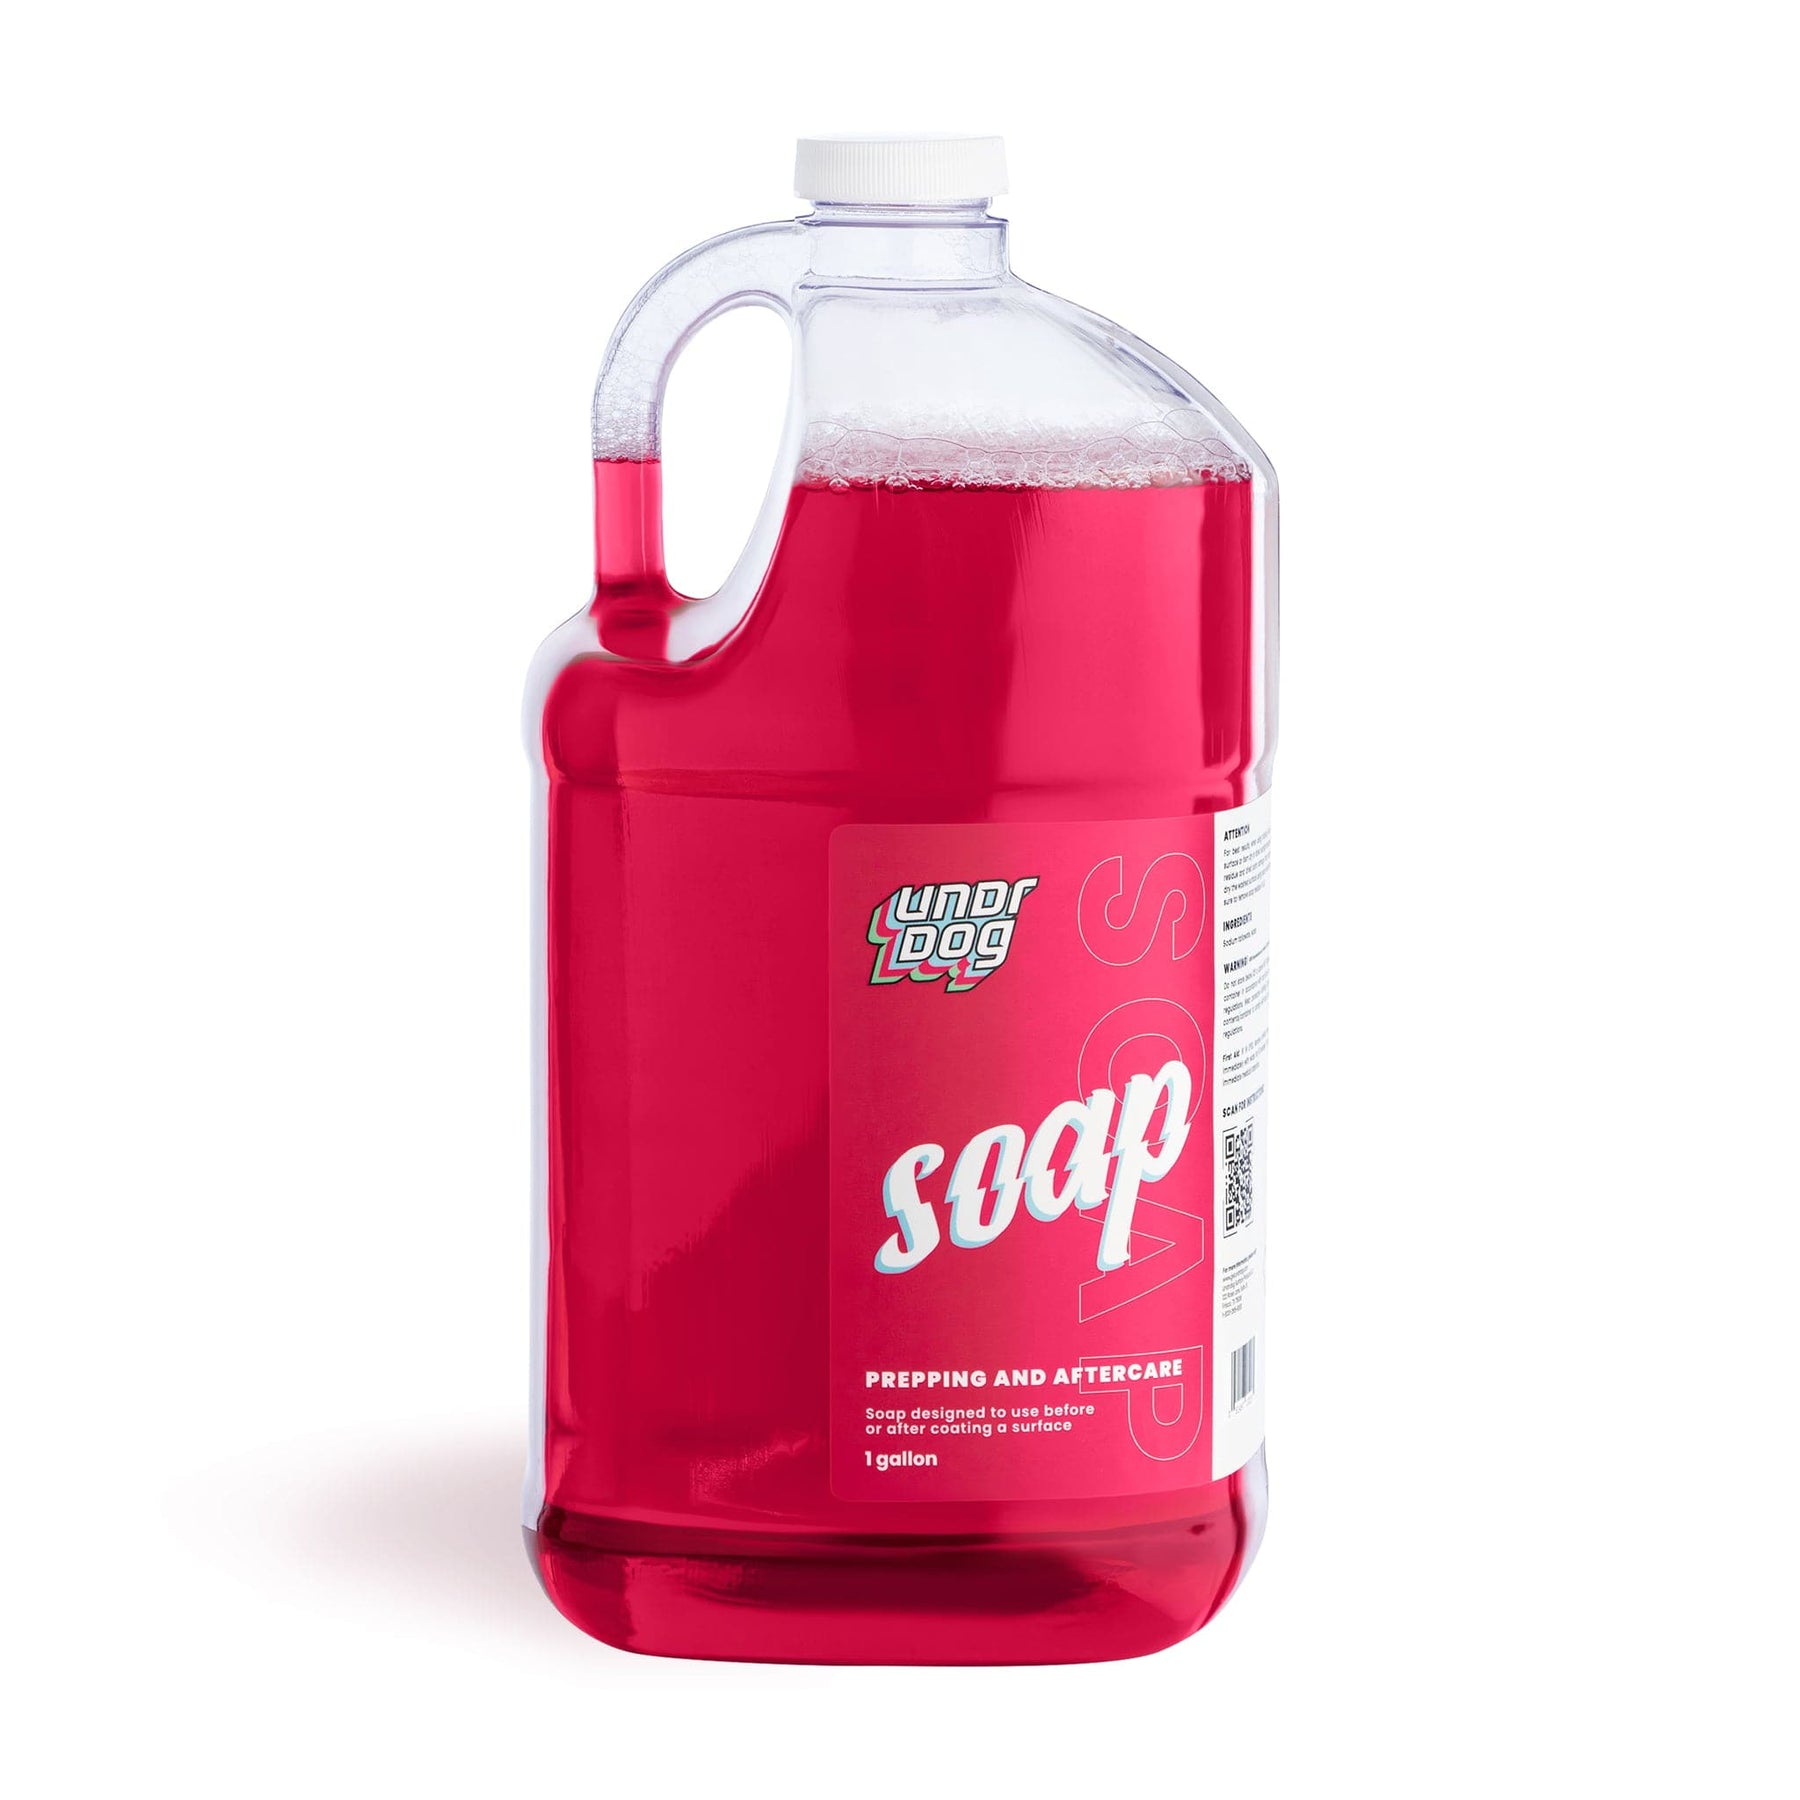 Soap_1_Gallon.jpg - Undrdog Soap - Undrdog Surface Products